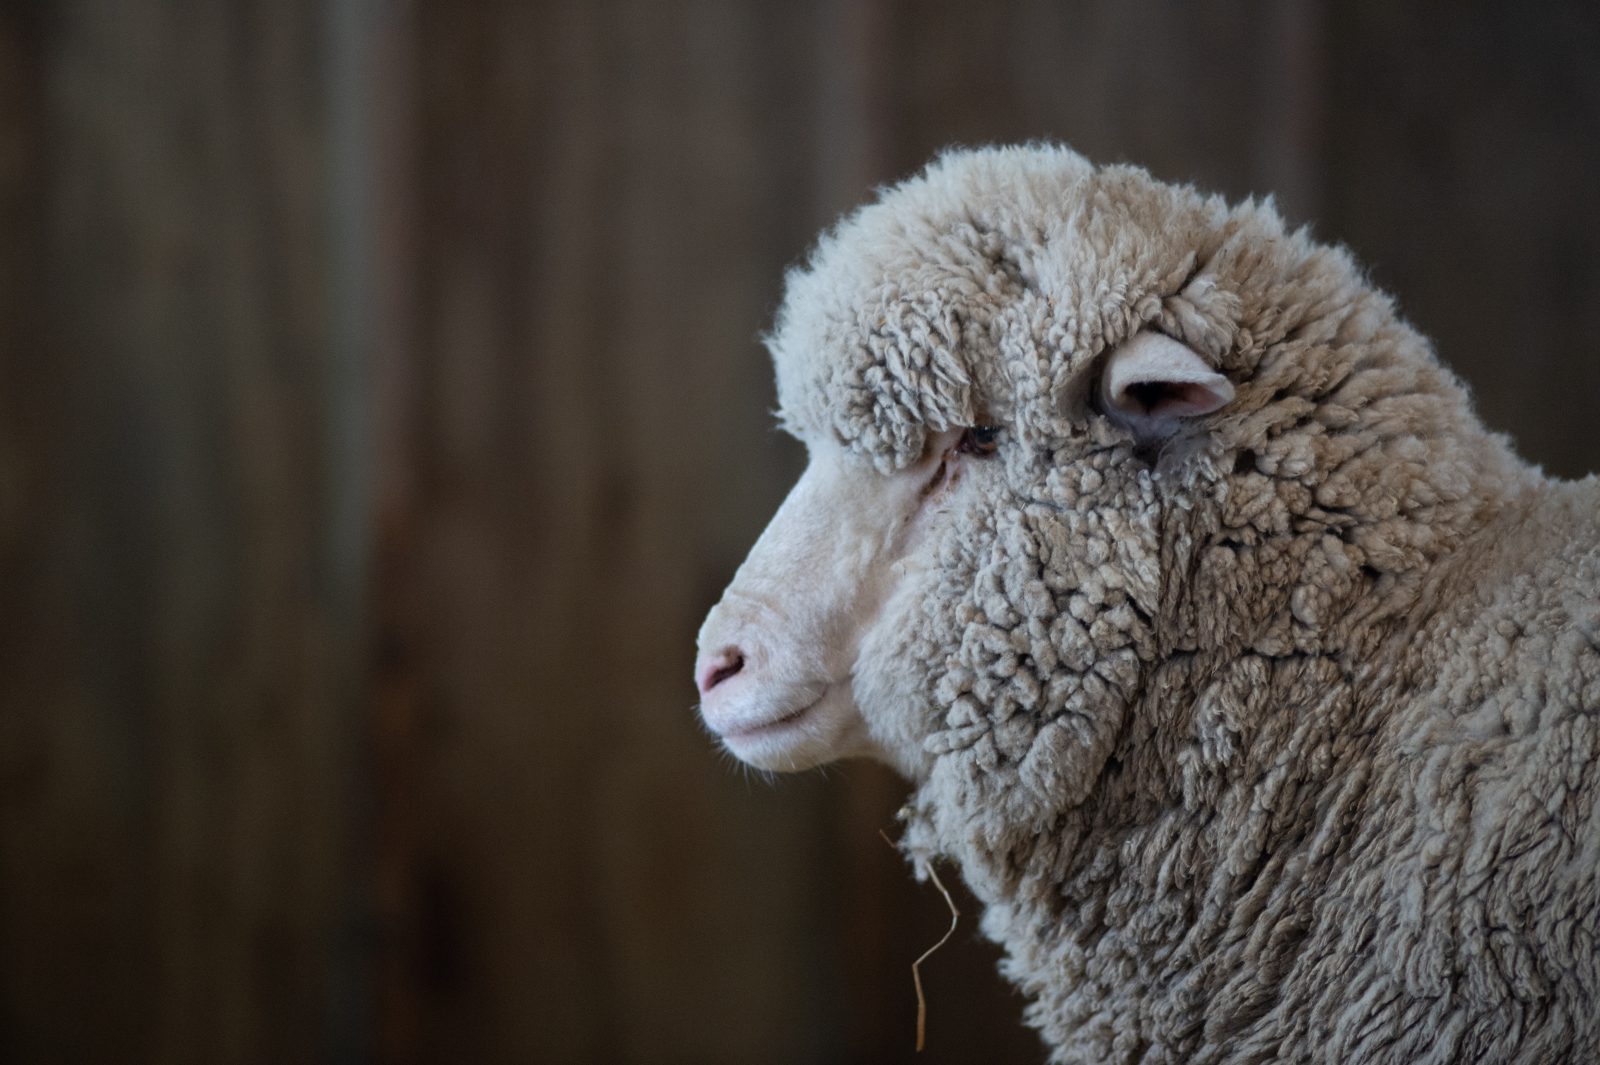 Close-up image of Elli Sheep's Face